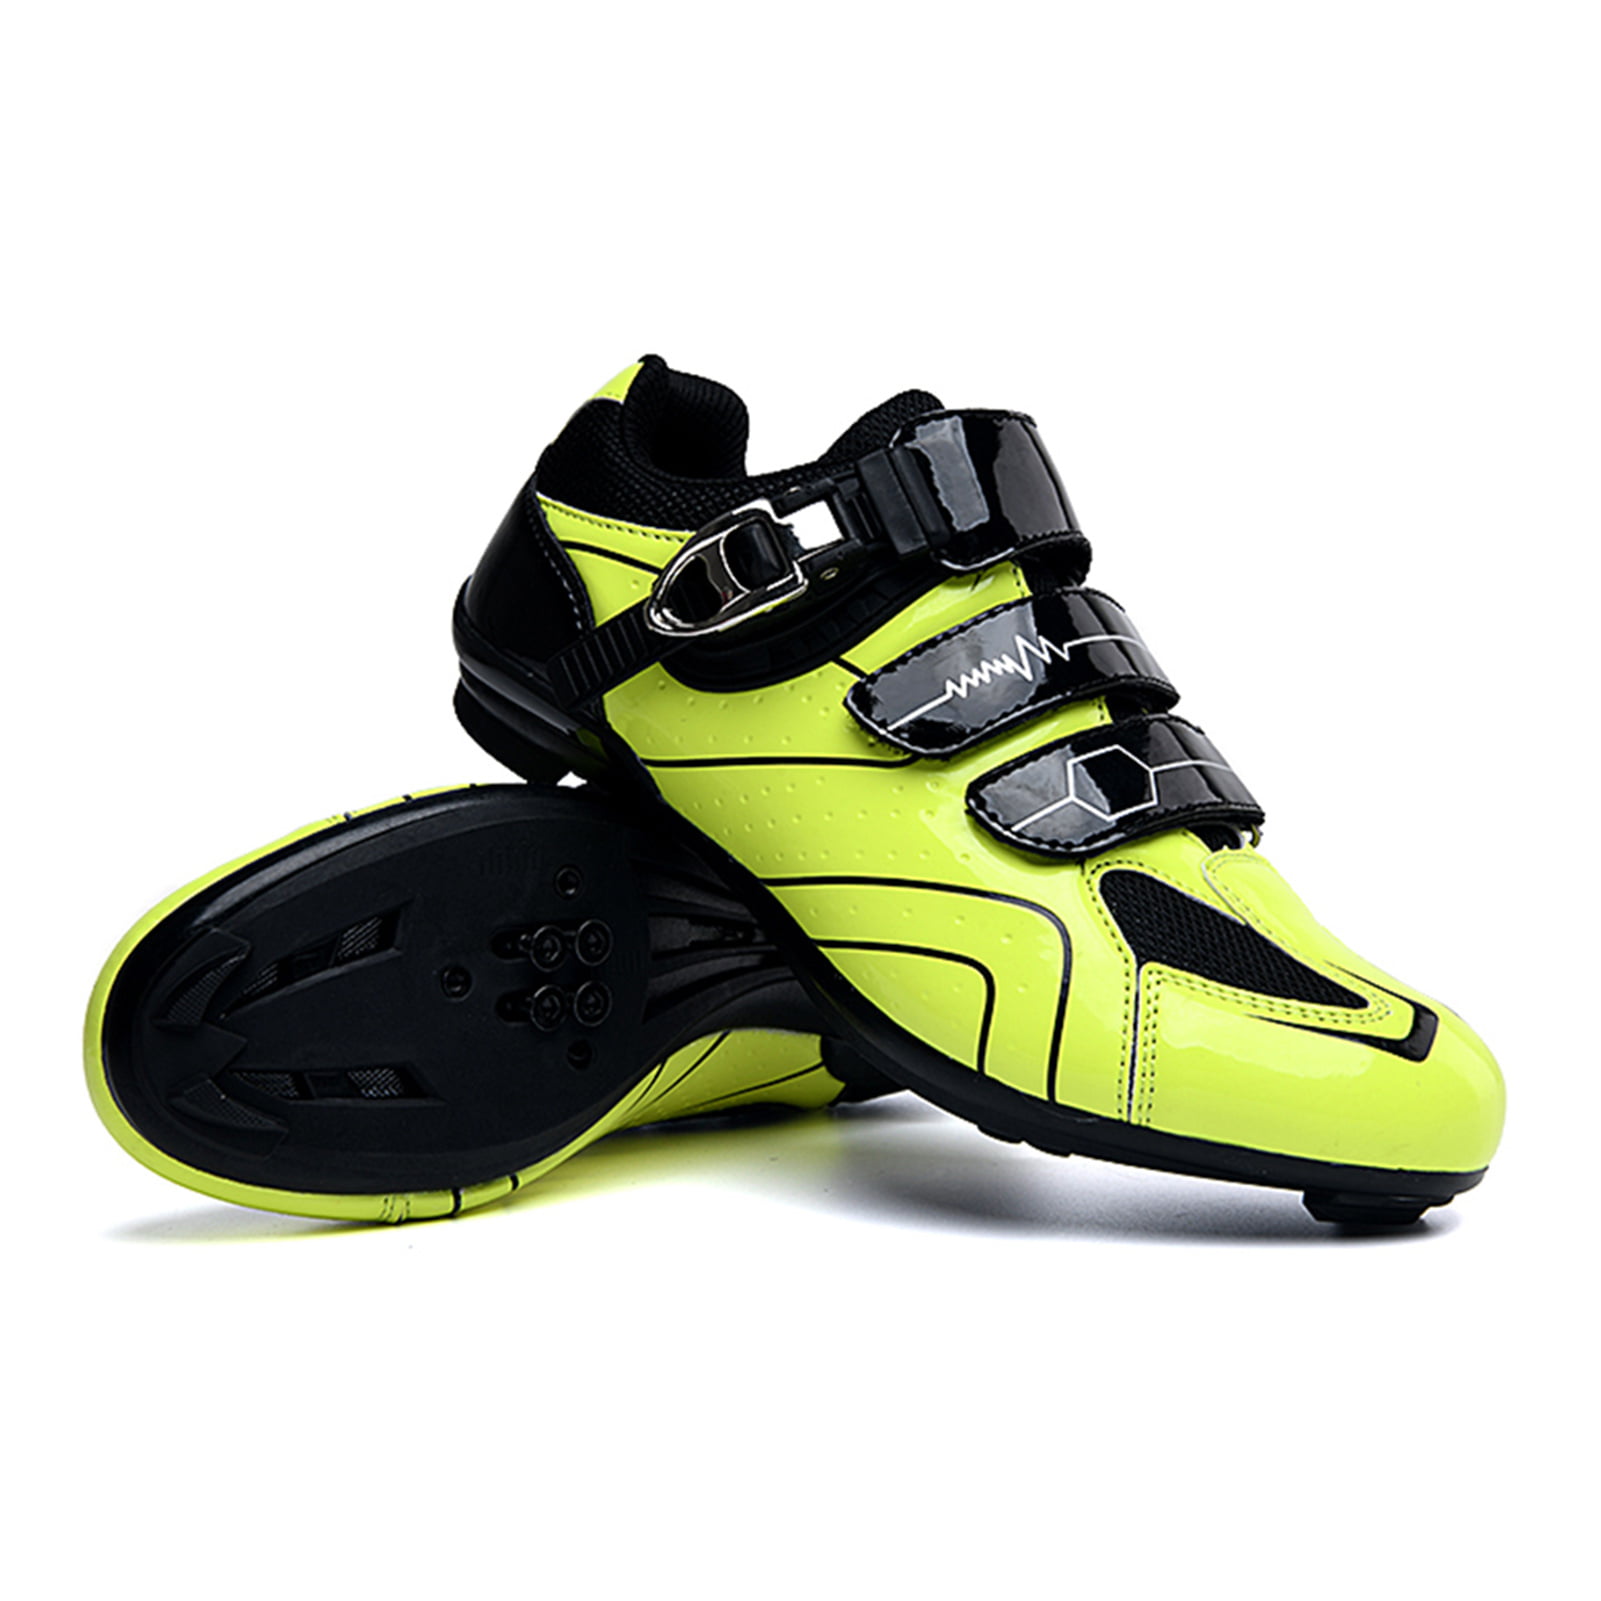 Details about   Ultralight MTB Cycling Shoes Men Professional Road Mountain Bike Cycling Sneaker 